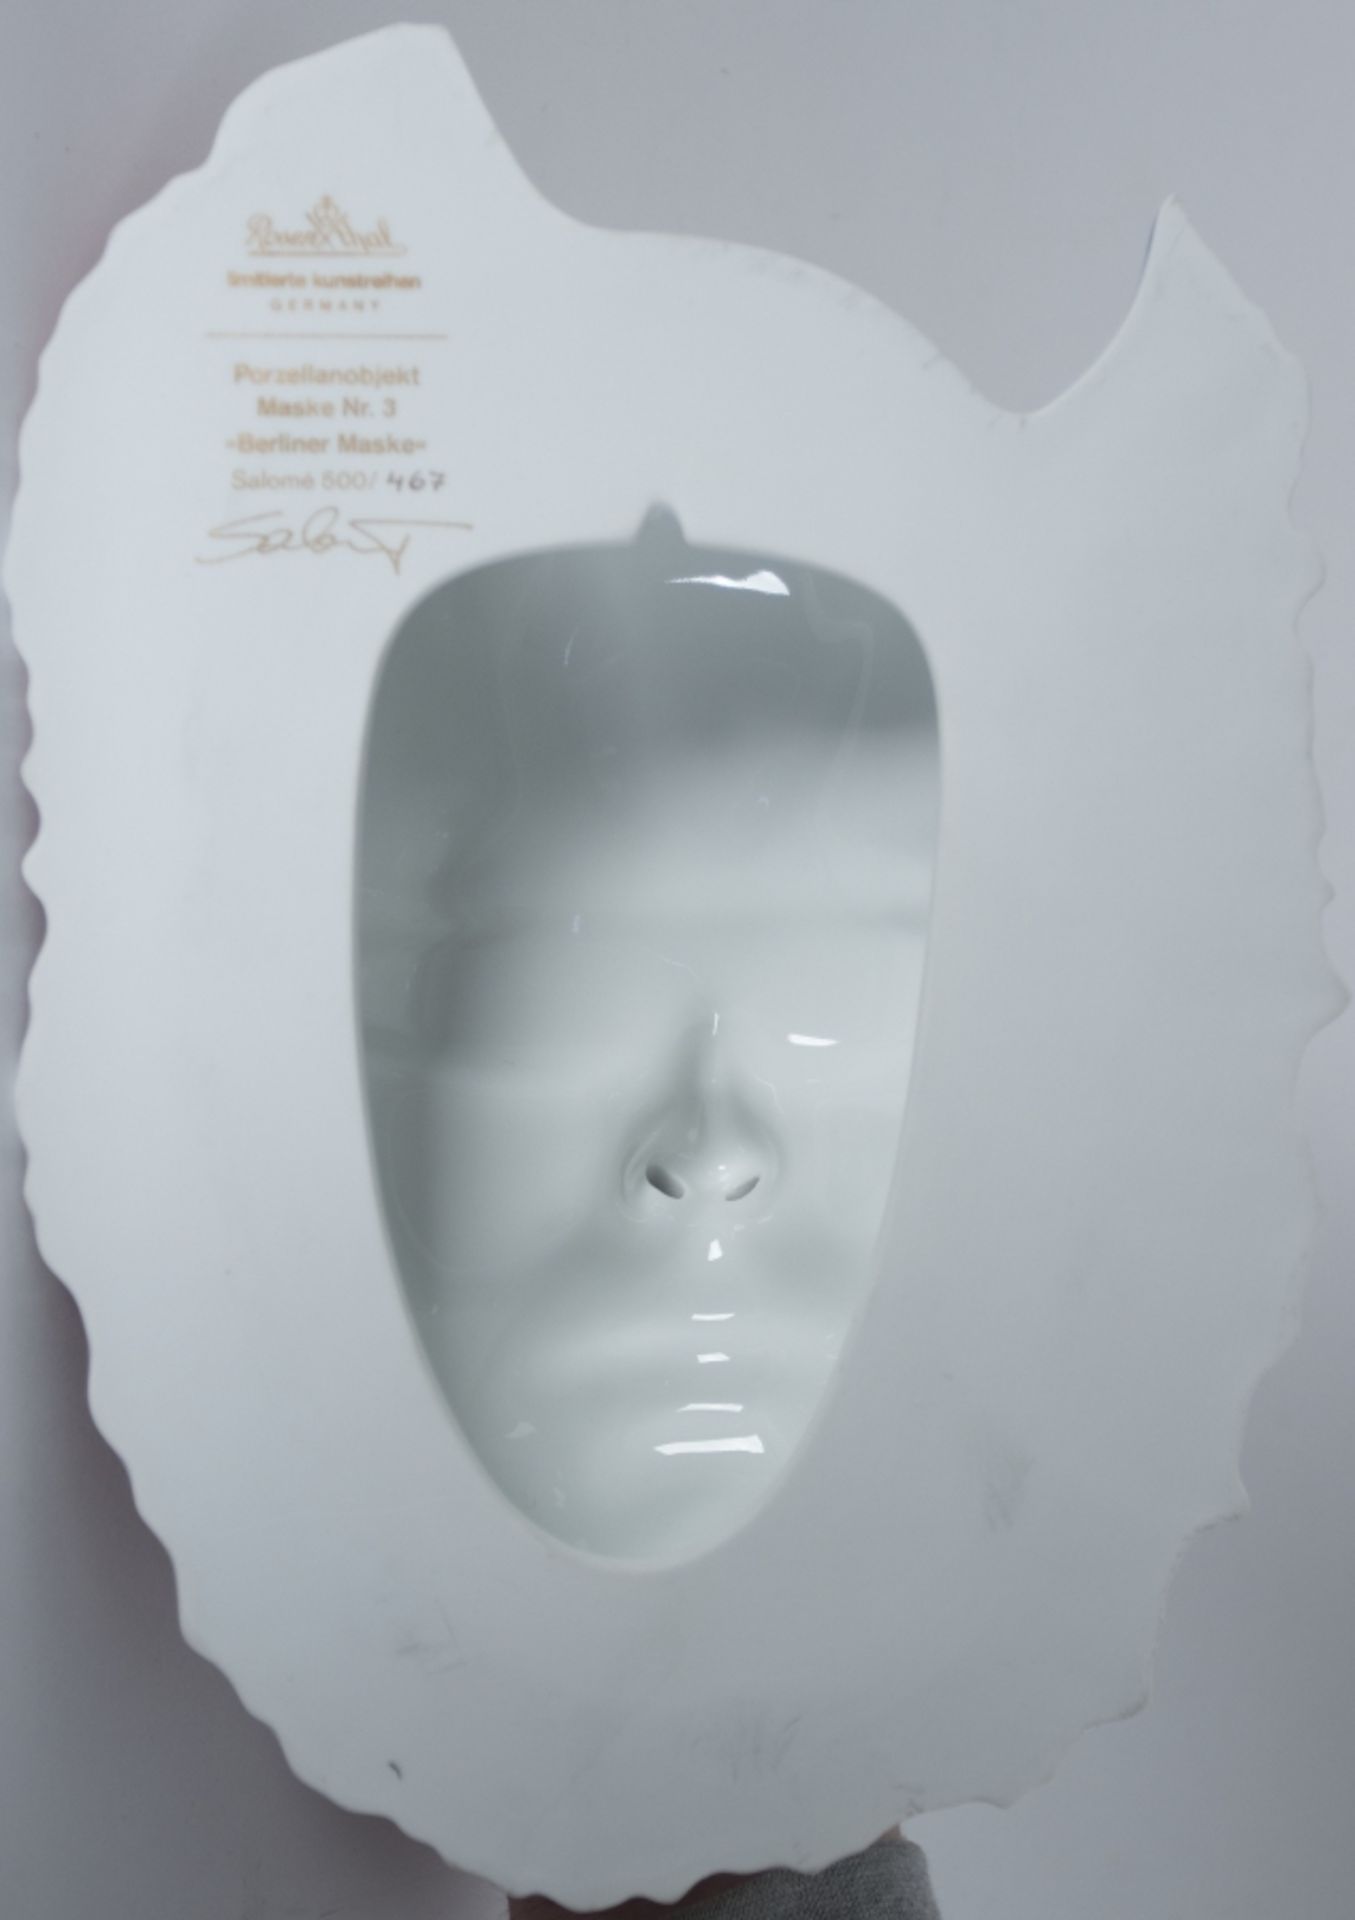 Salome (Wolfgang Cihlarz): Berliner Maske - Image 3 of 5